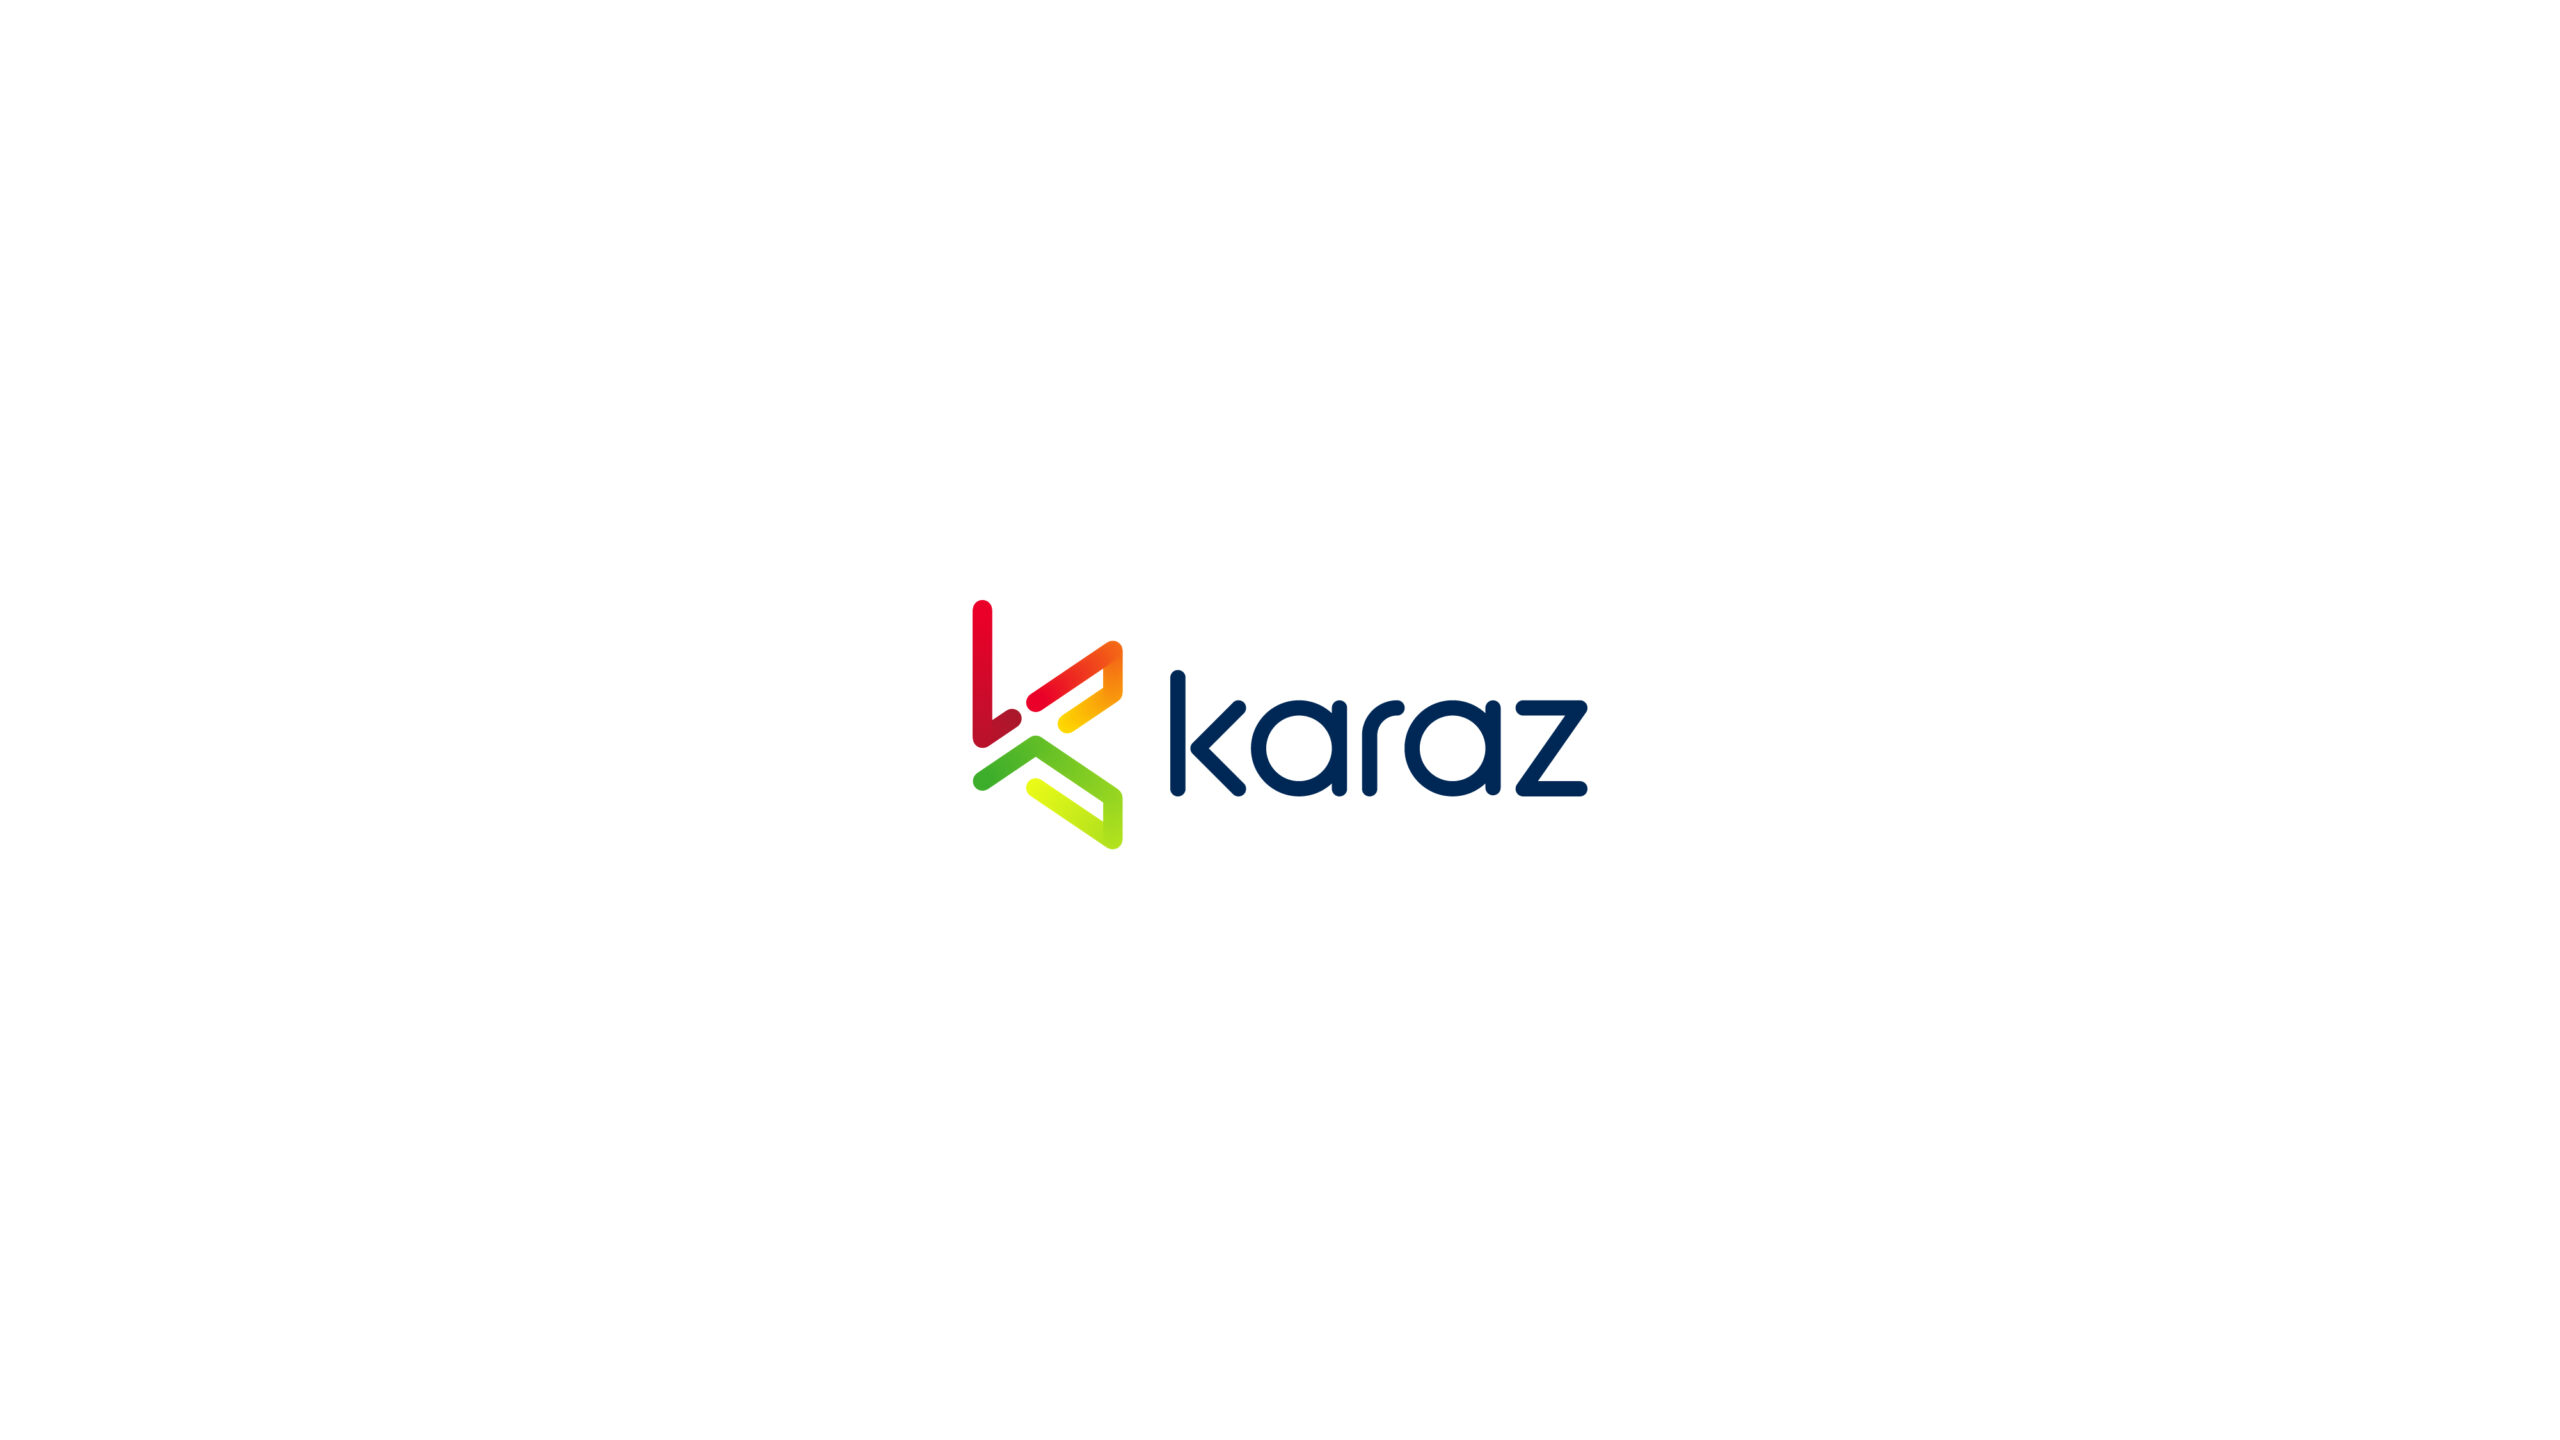 Karaz-Branding-By-Millimeter-Creative-Agency-1-02